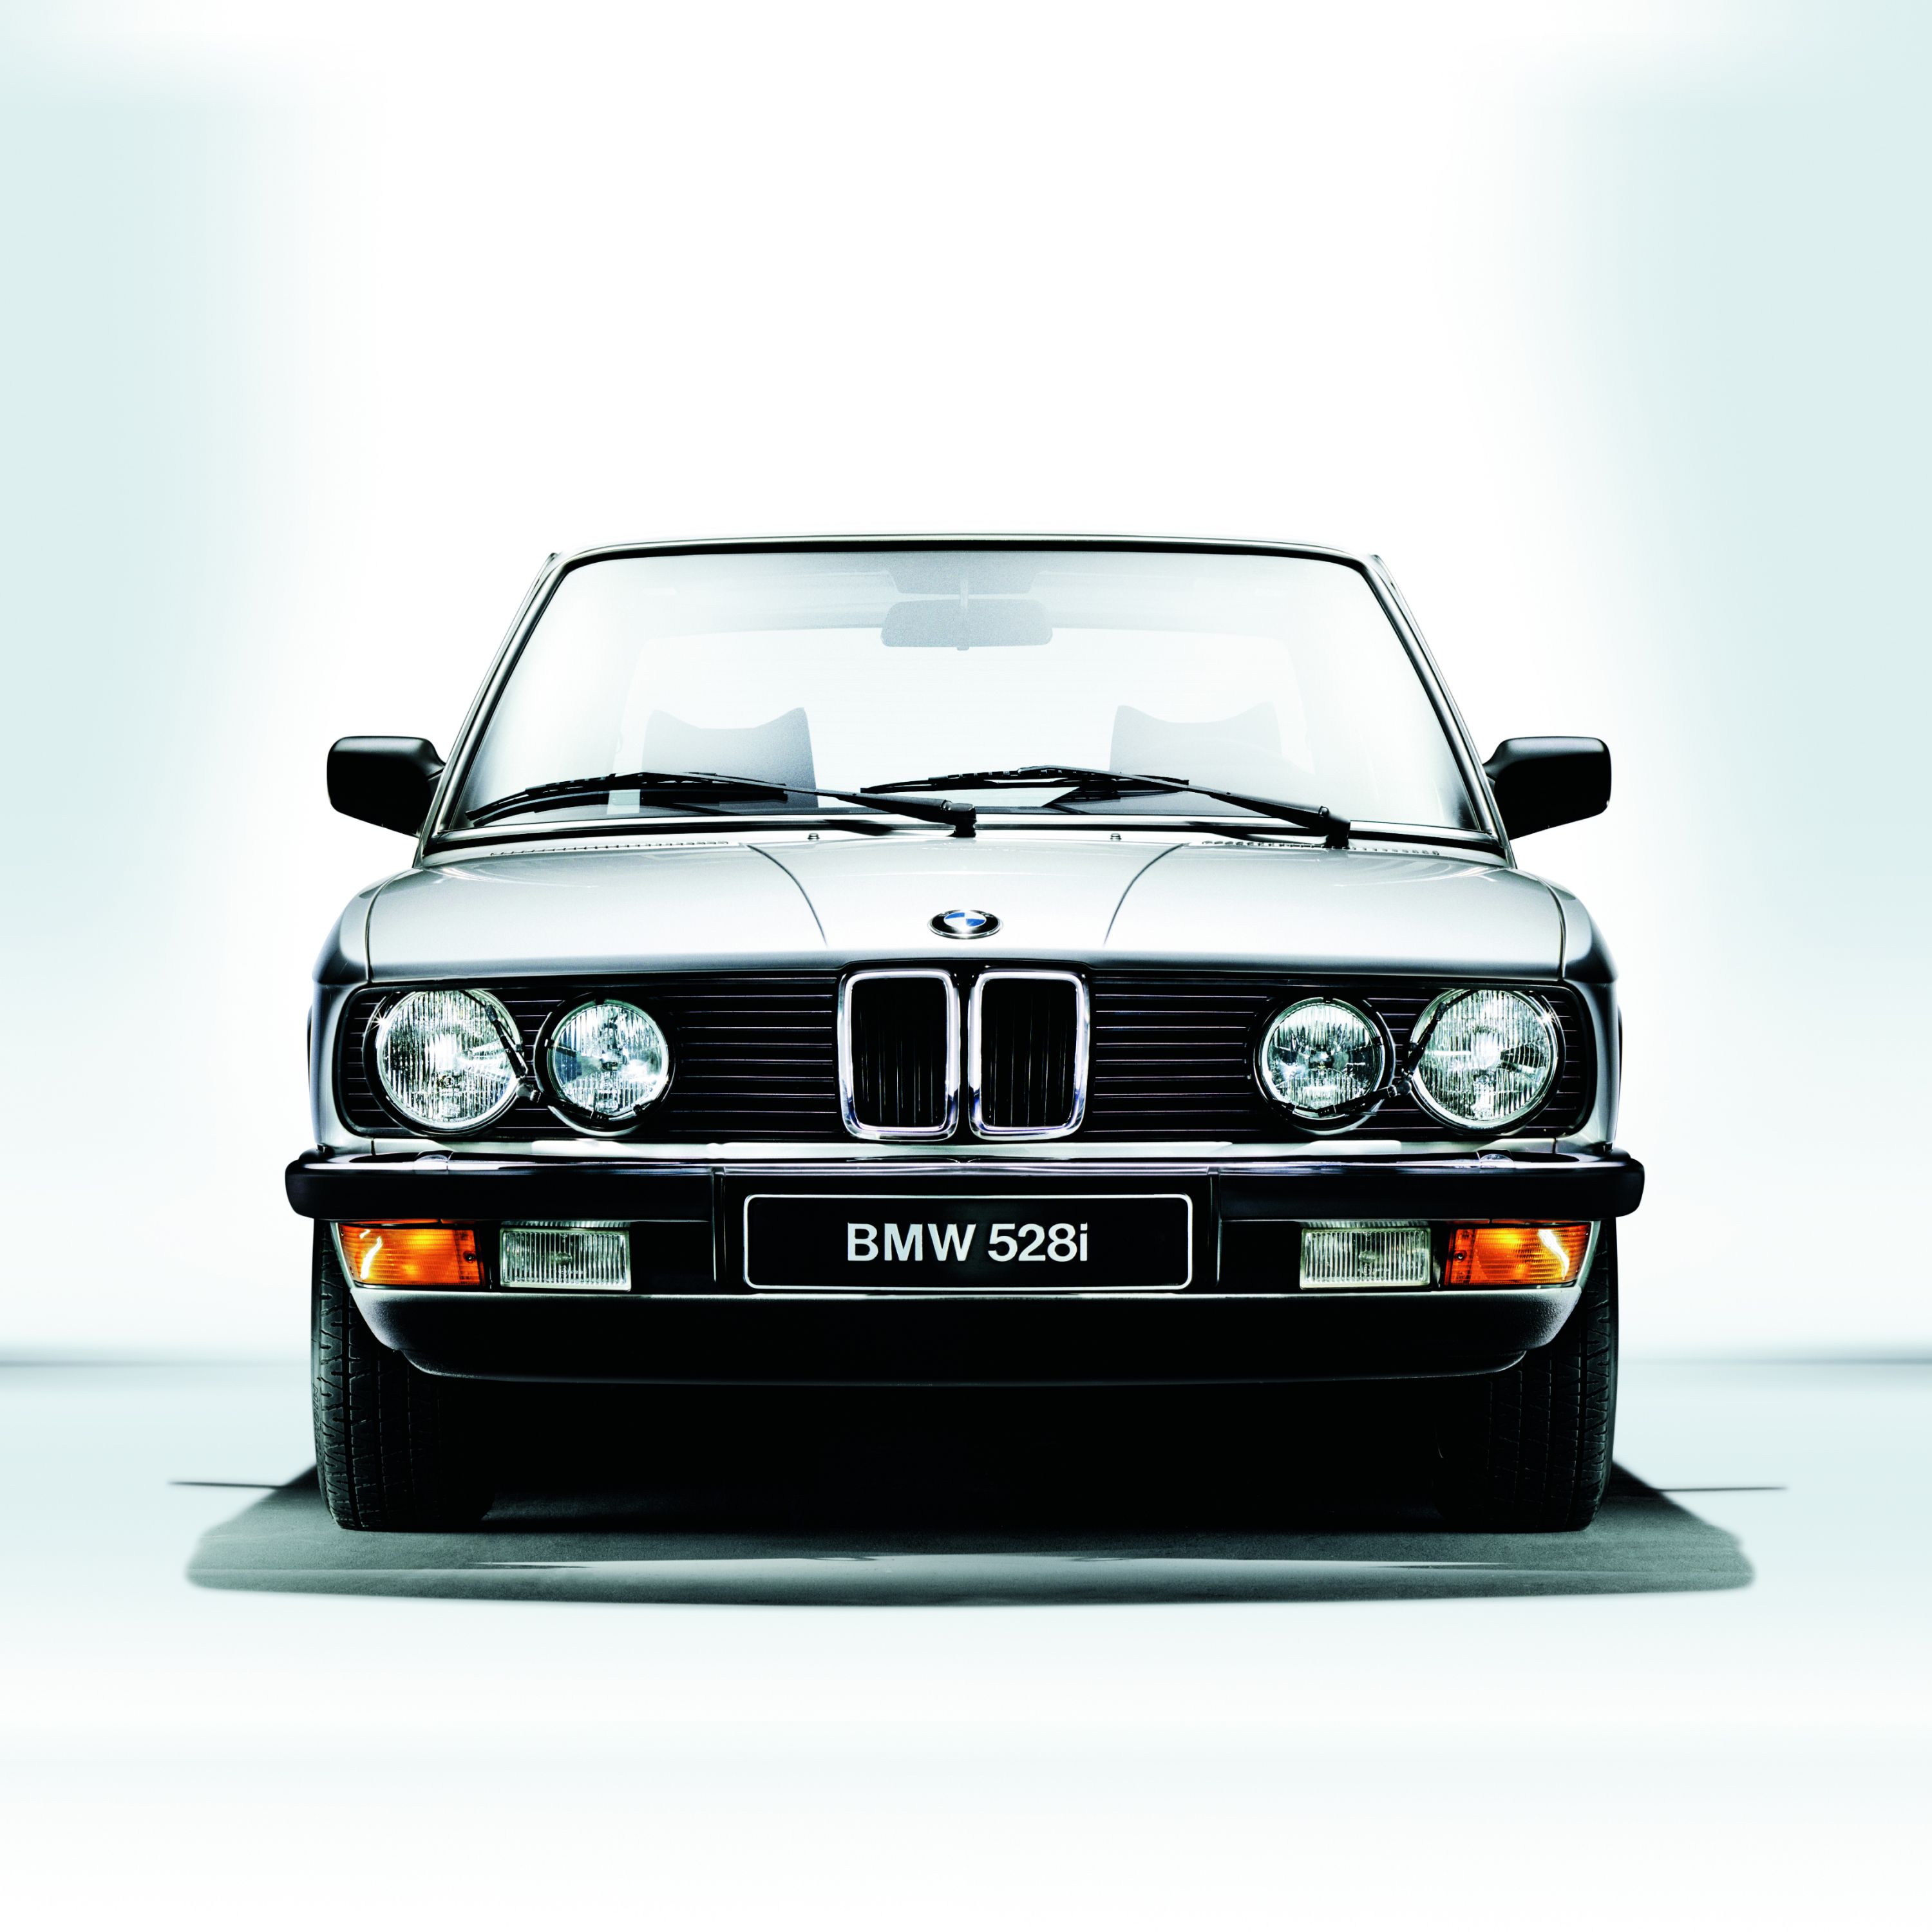 Original BMW Accessories: Spring and Summer